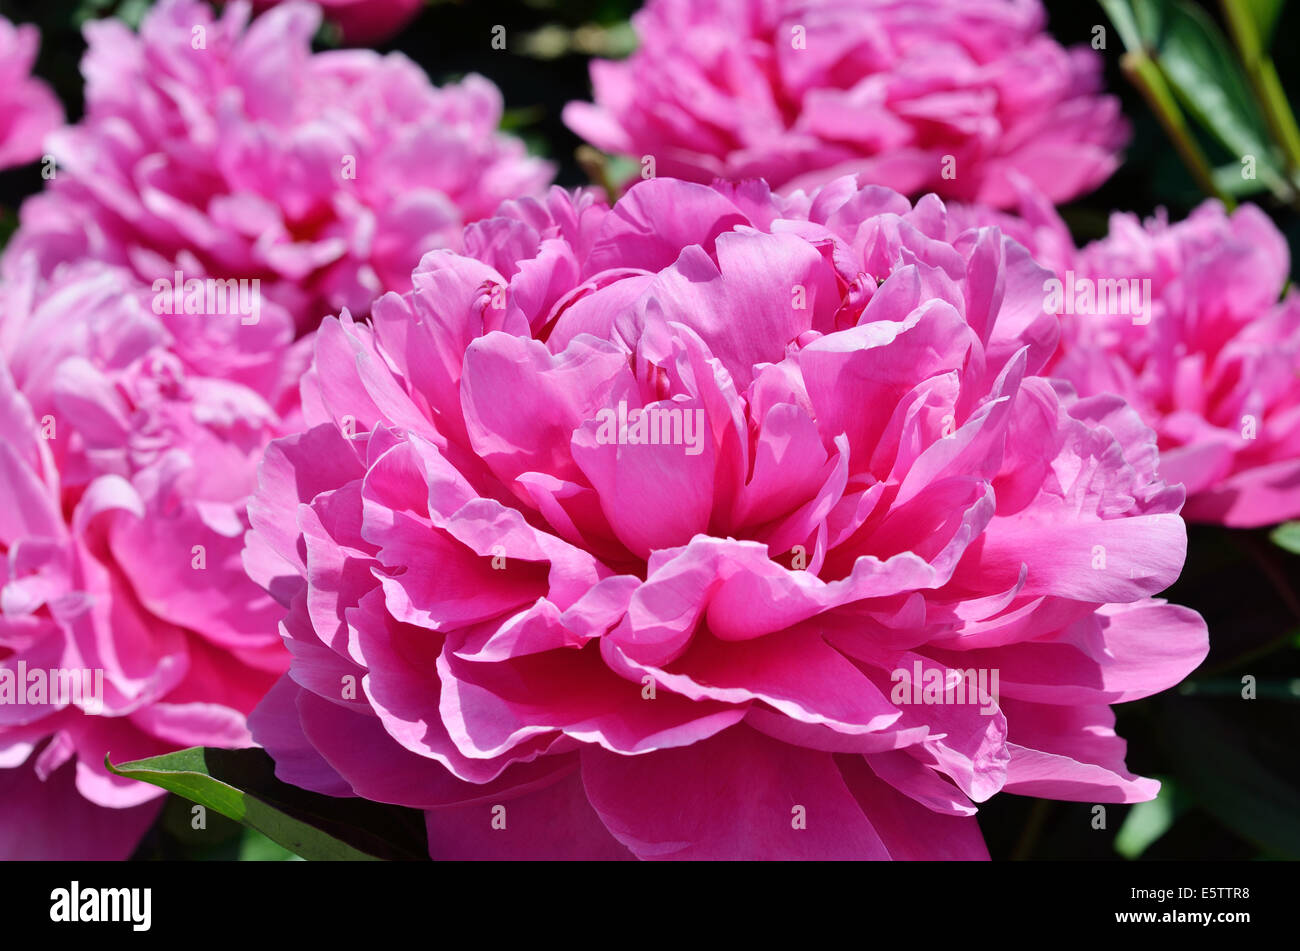 Pink flowers of peony Stock Photo